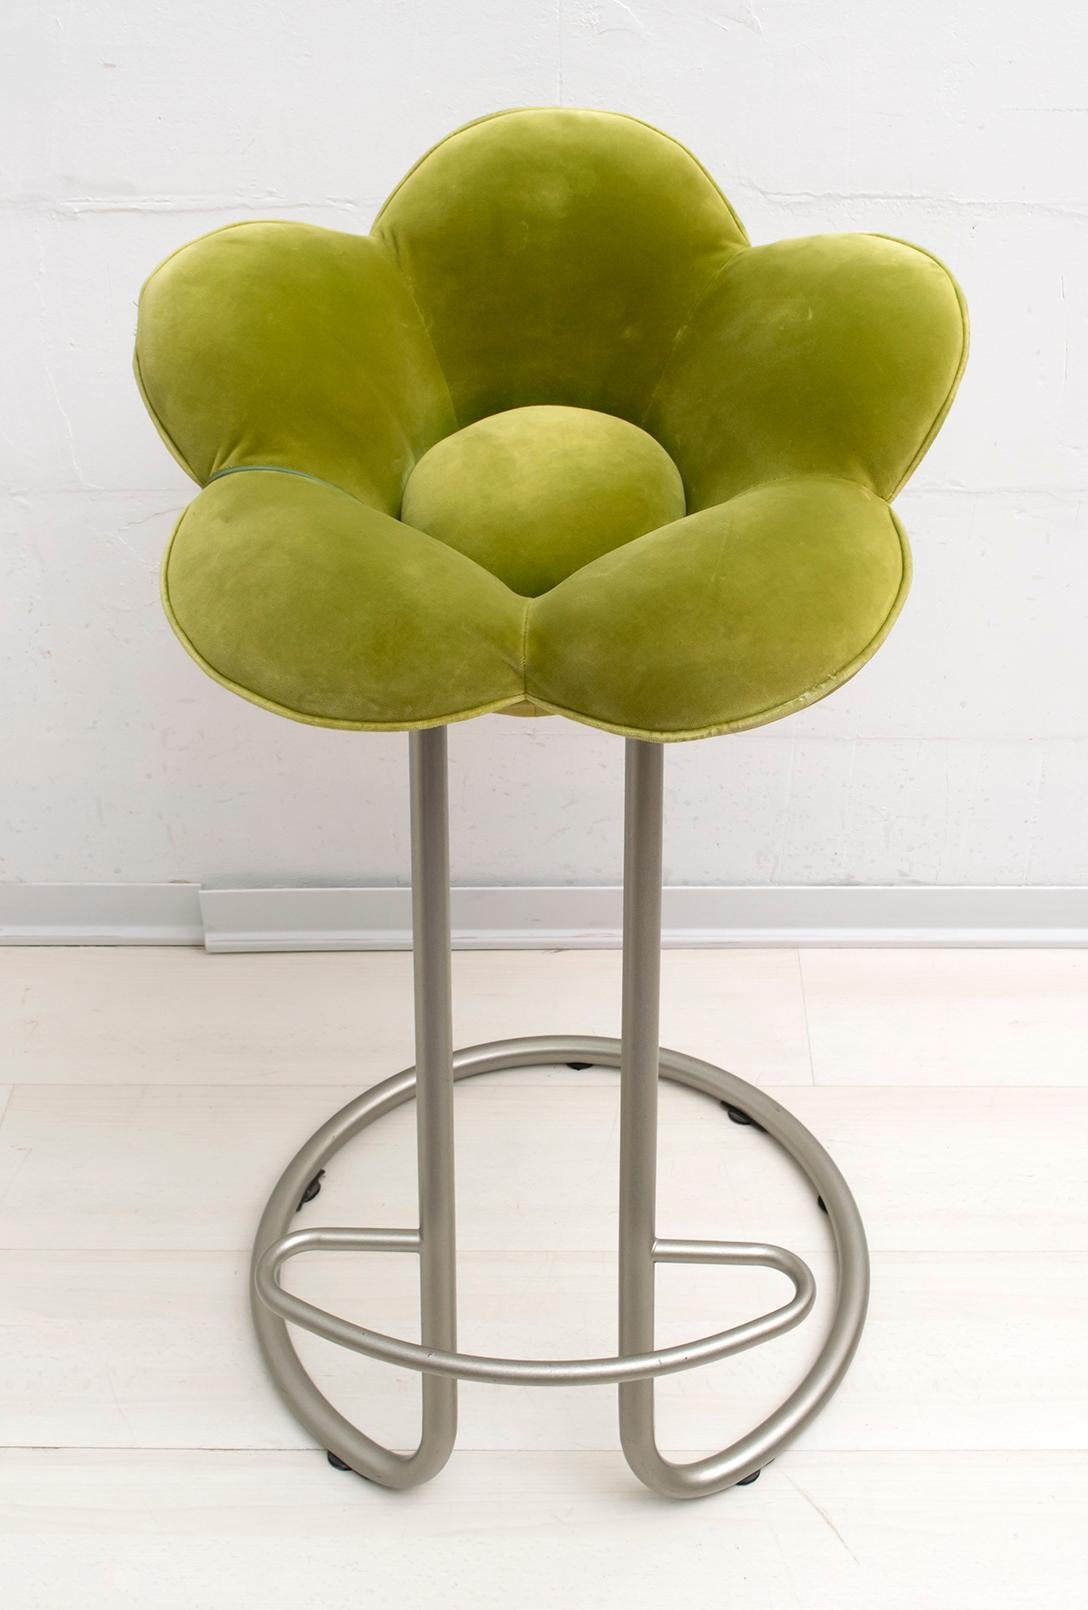 flower stool chair